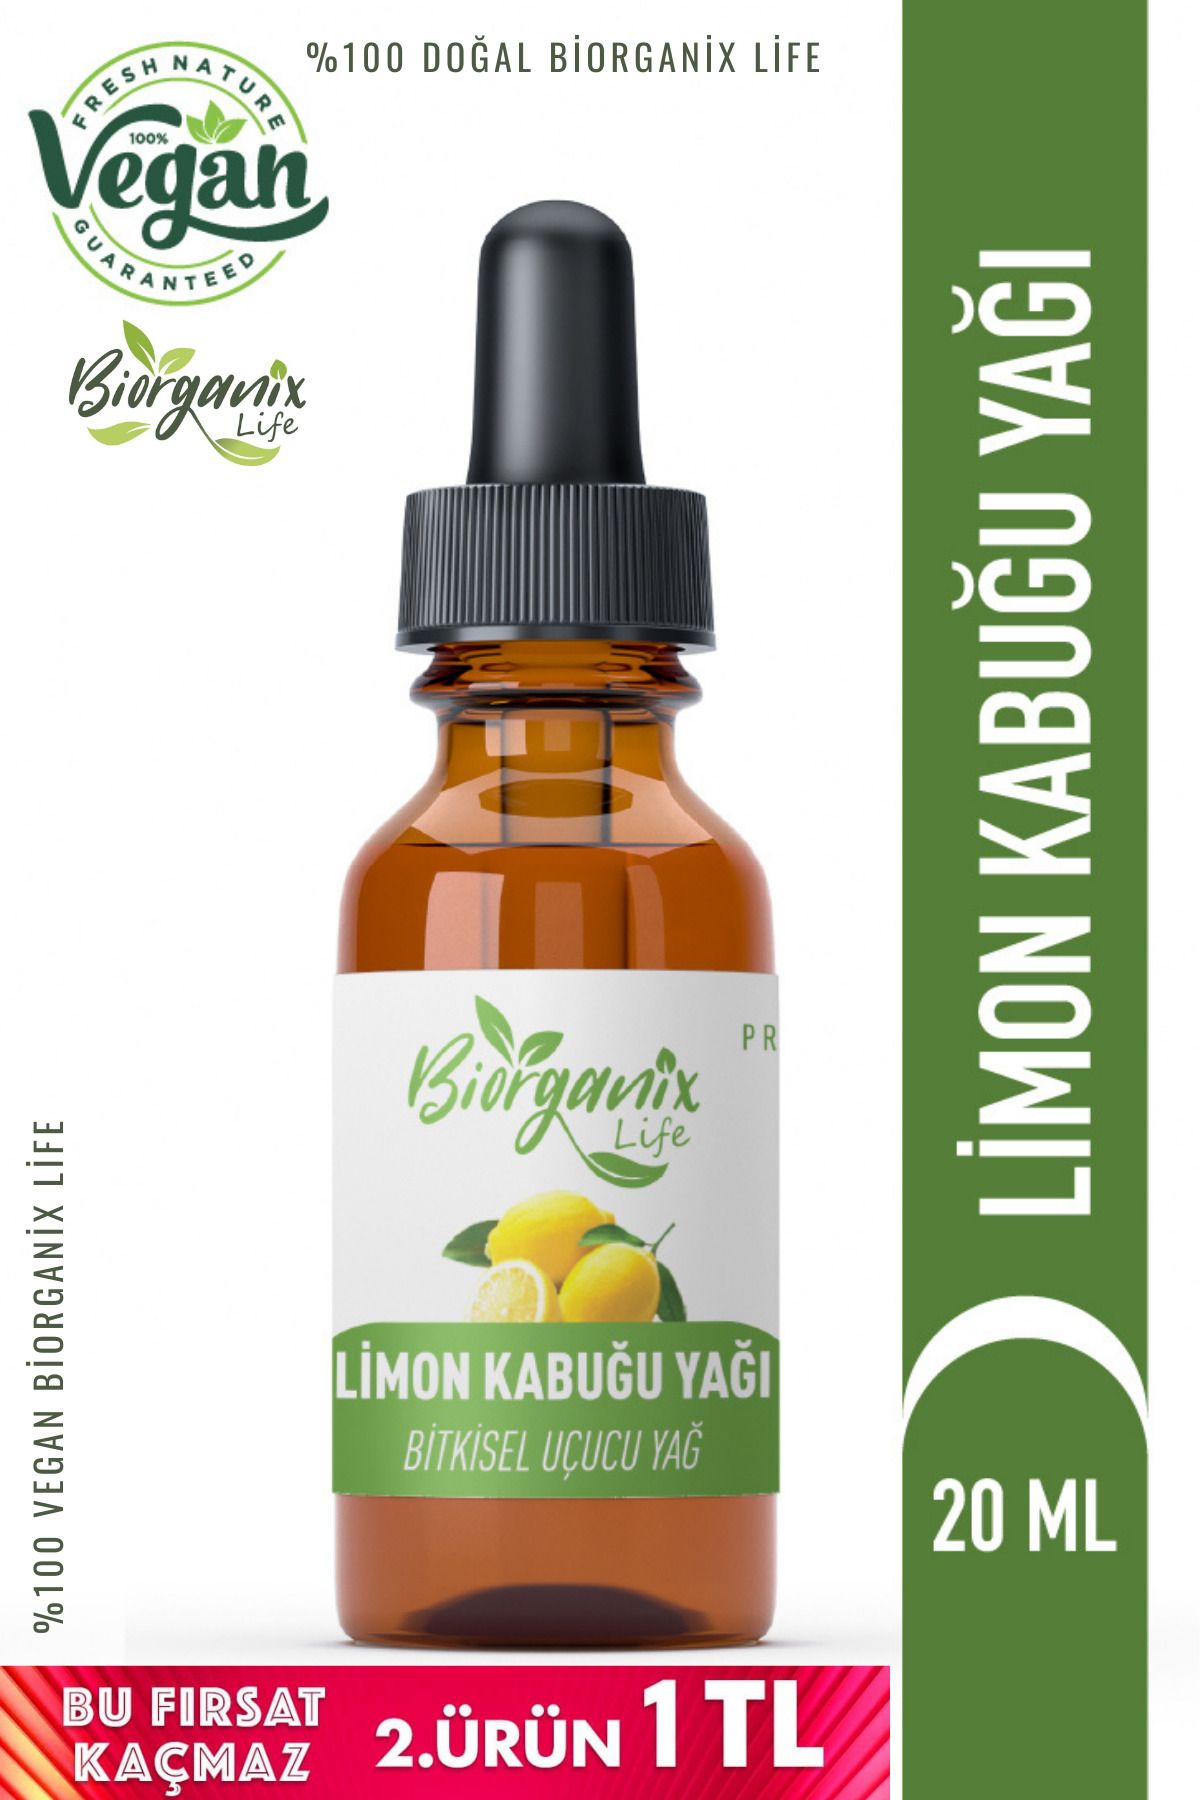 Biorganix Life Limon Kabuğu Yağı 20 ml